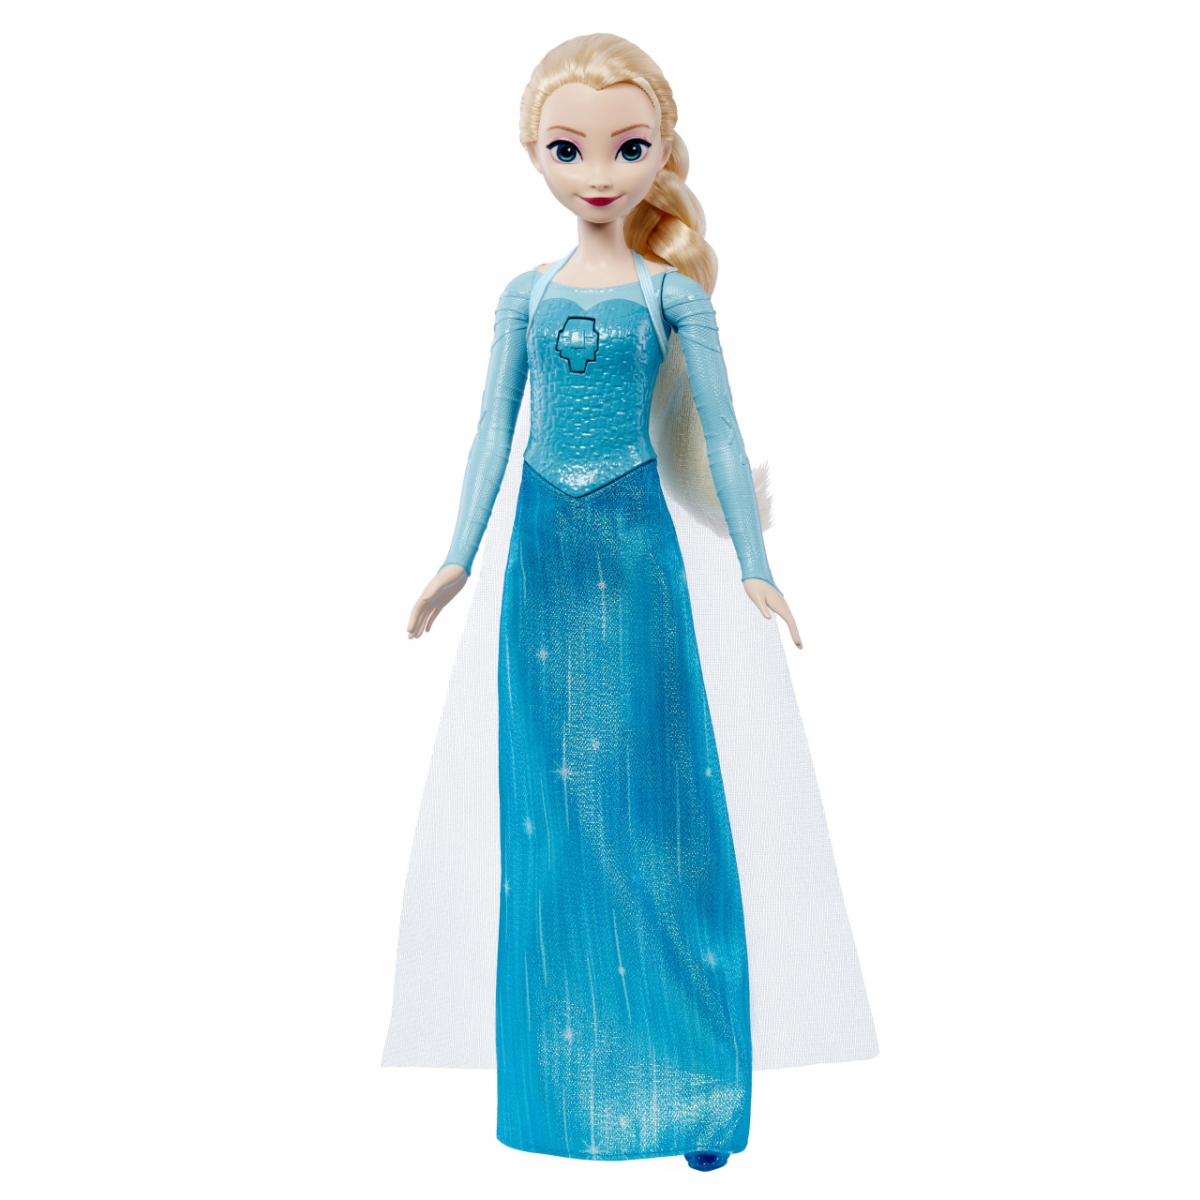 Frozen Fashion Dolls Singing Elsa - English Lelle HLW55